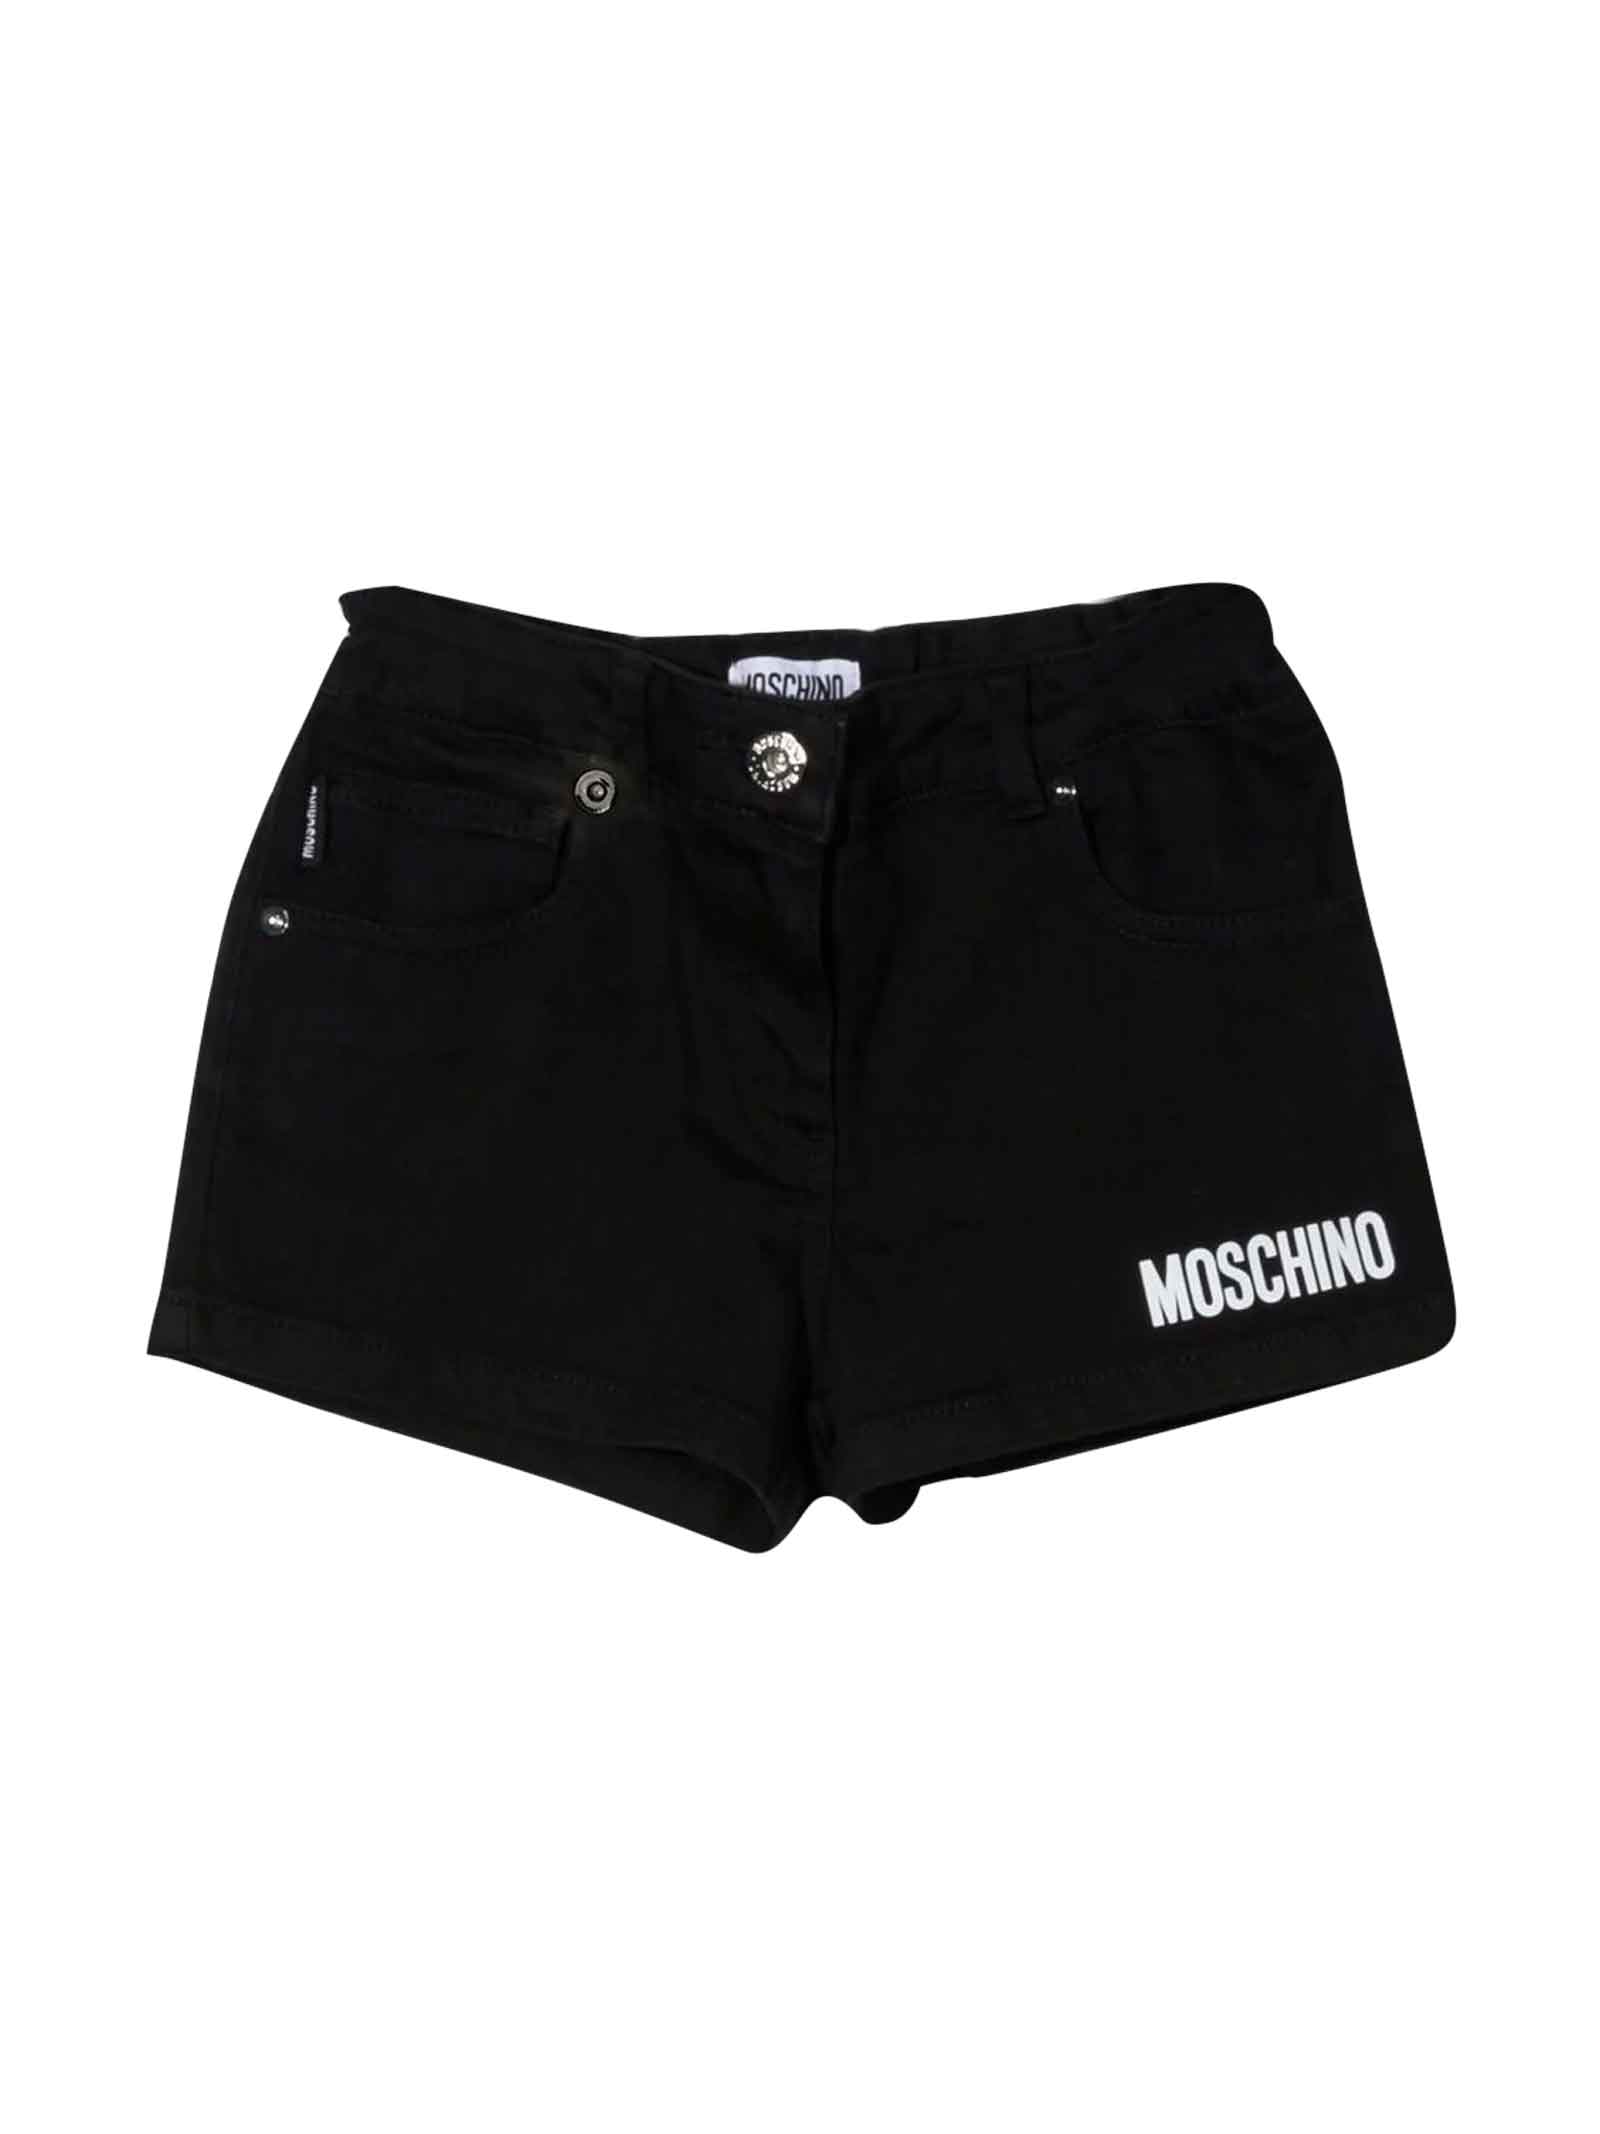 Moschino Girl Black Shorts